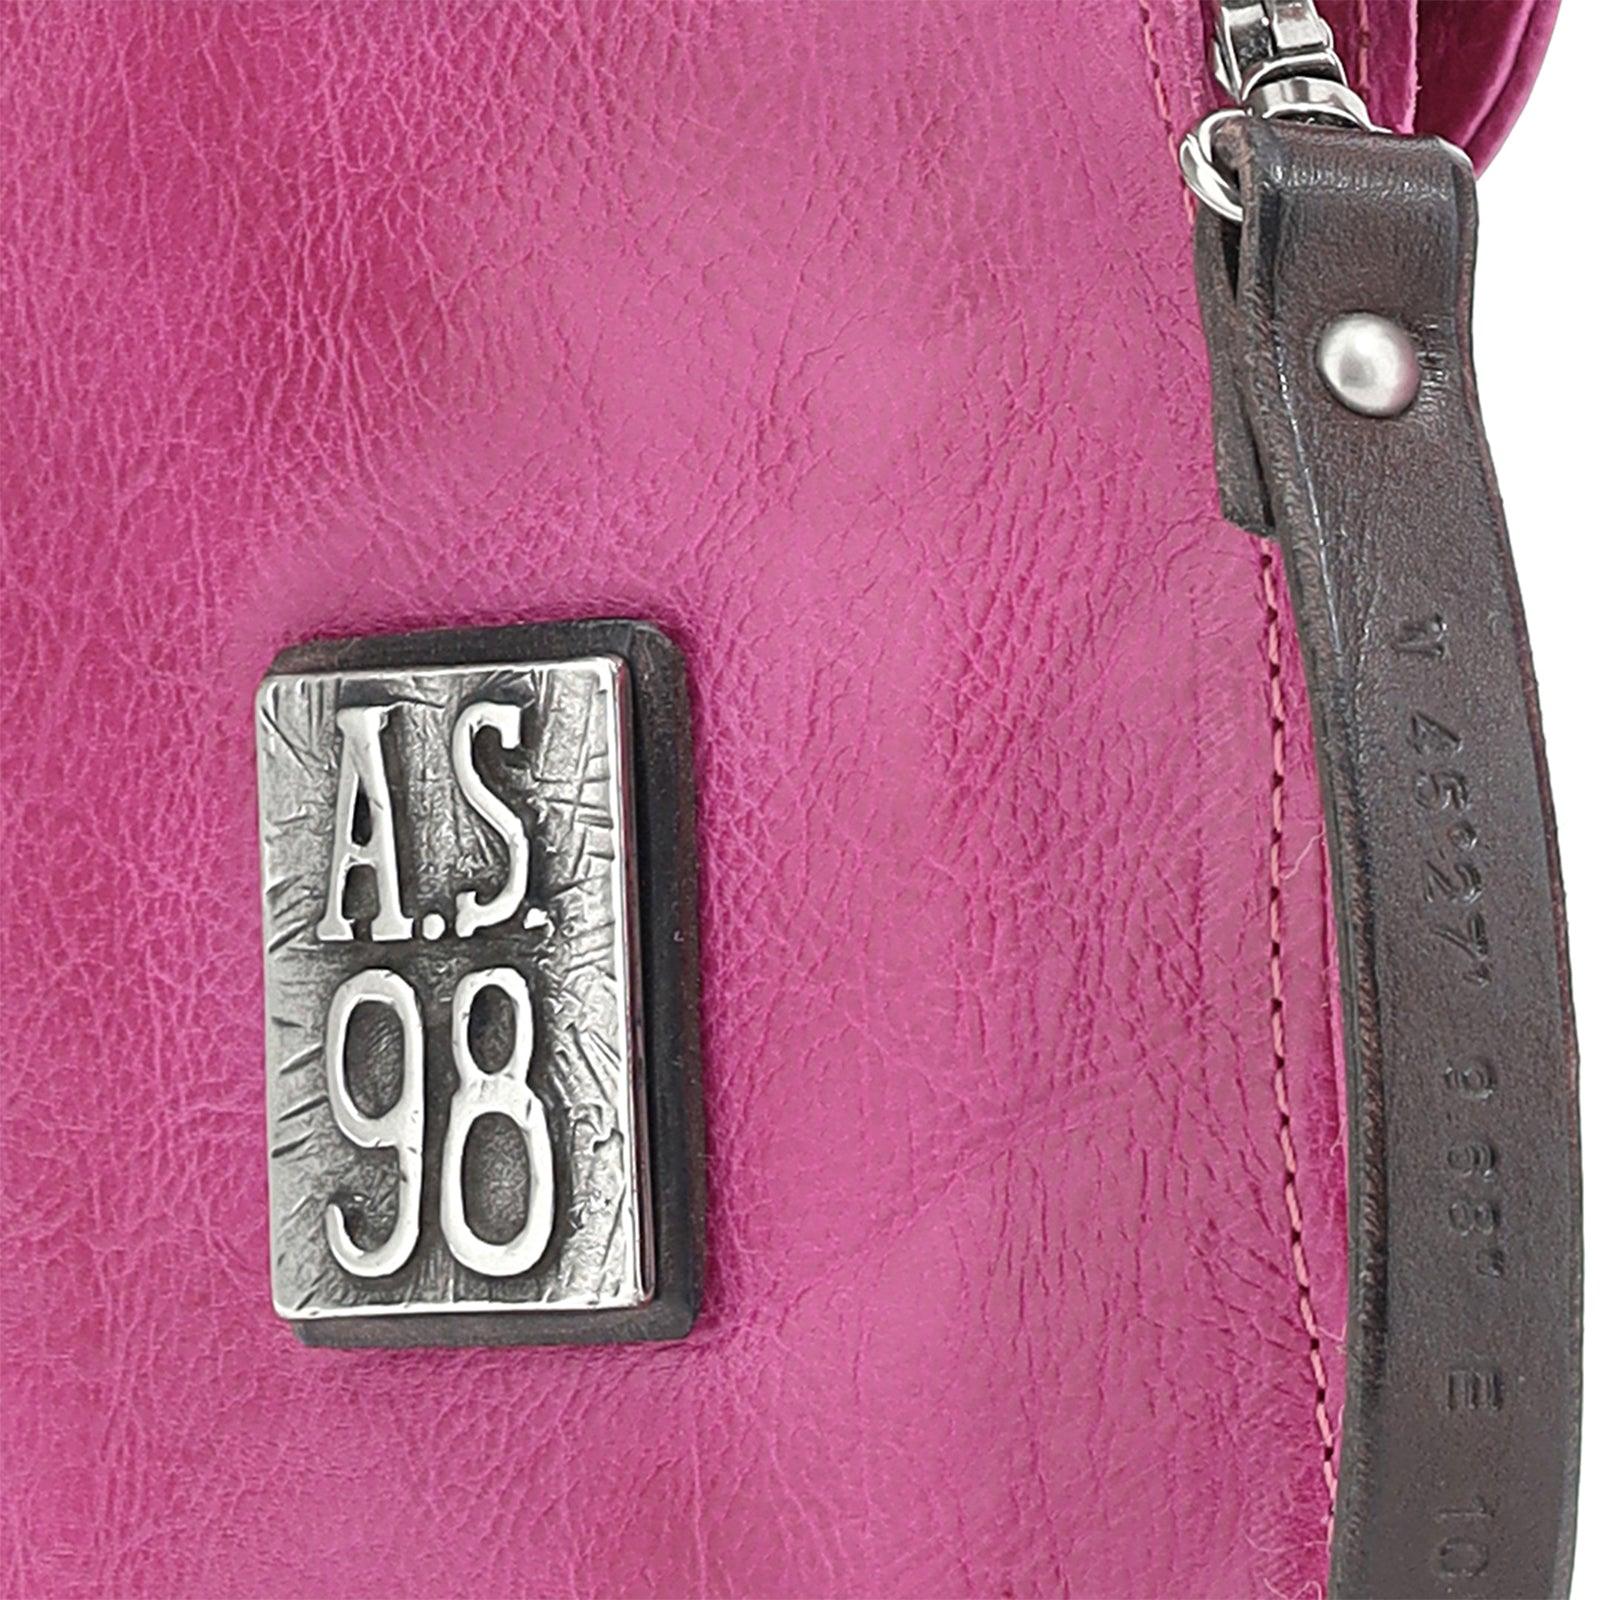 Ceva - A.S. 98 - Handbags